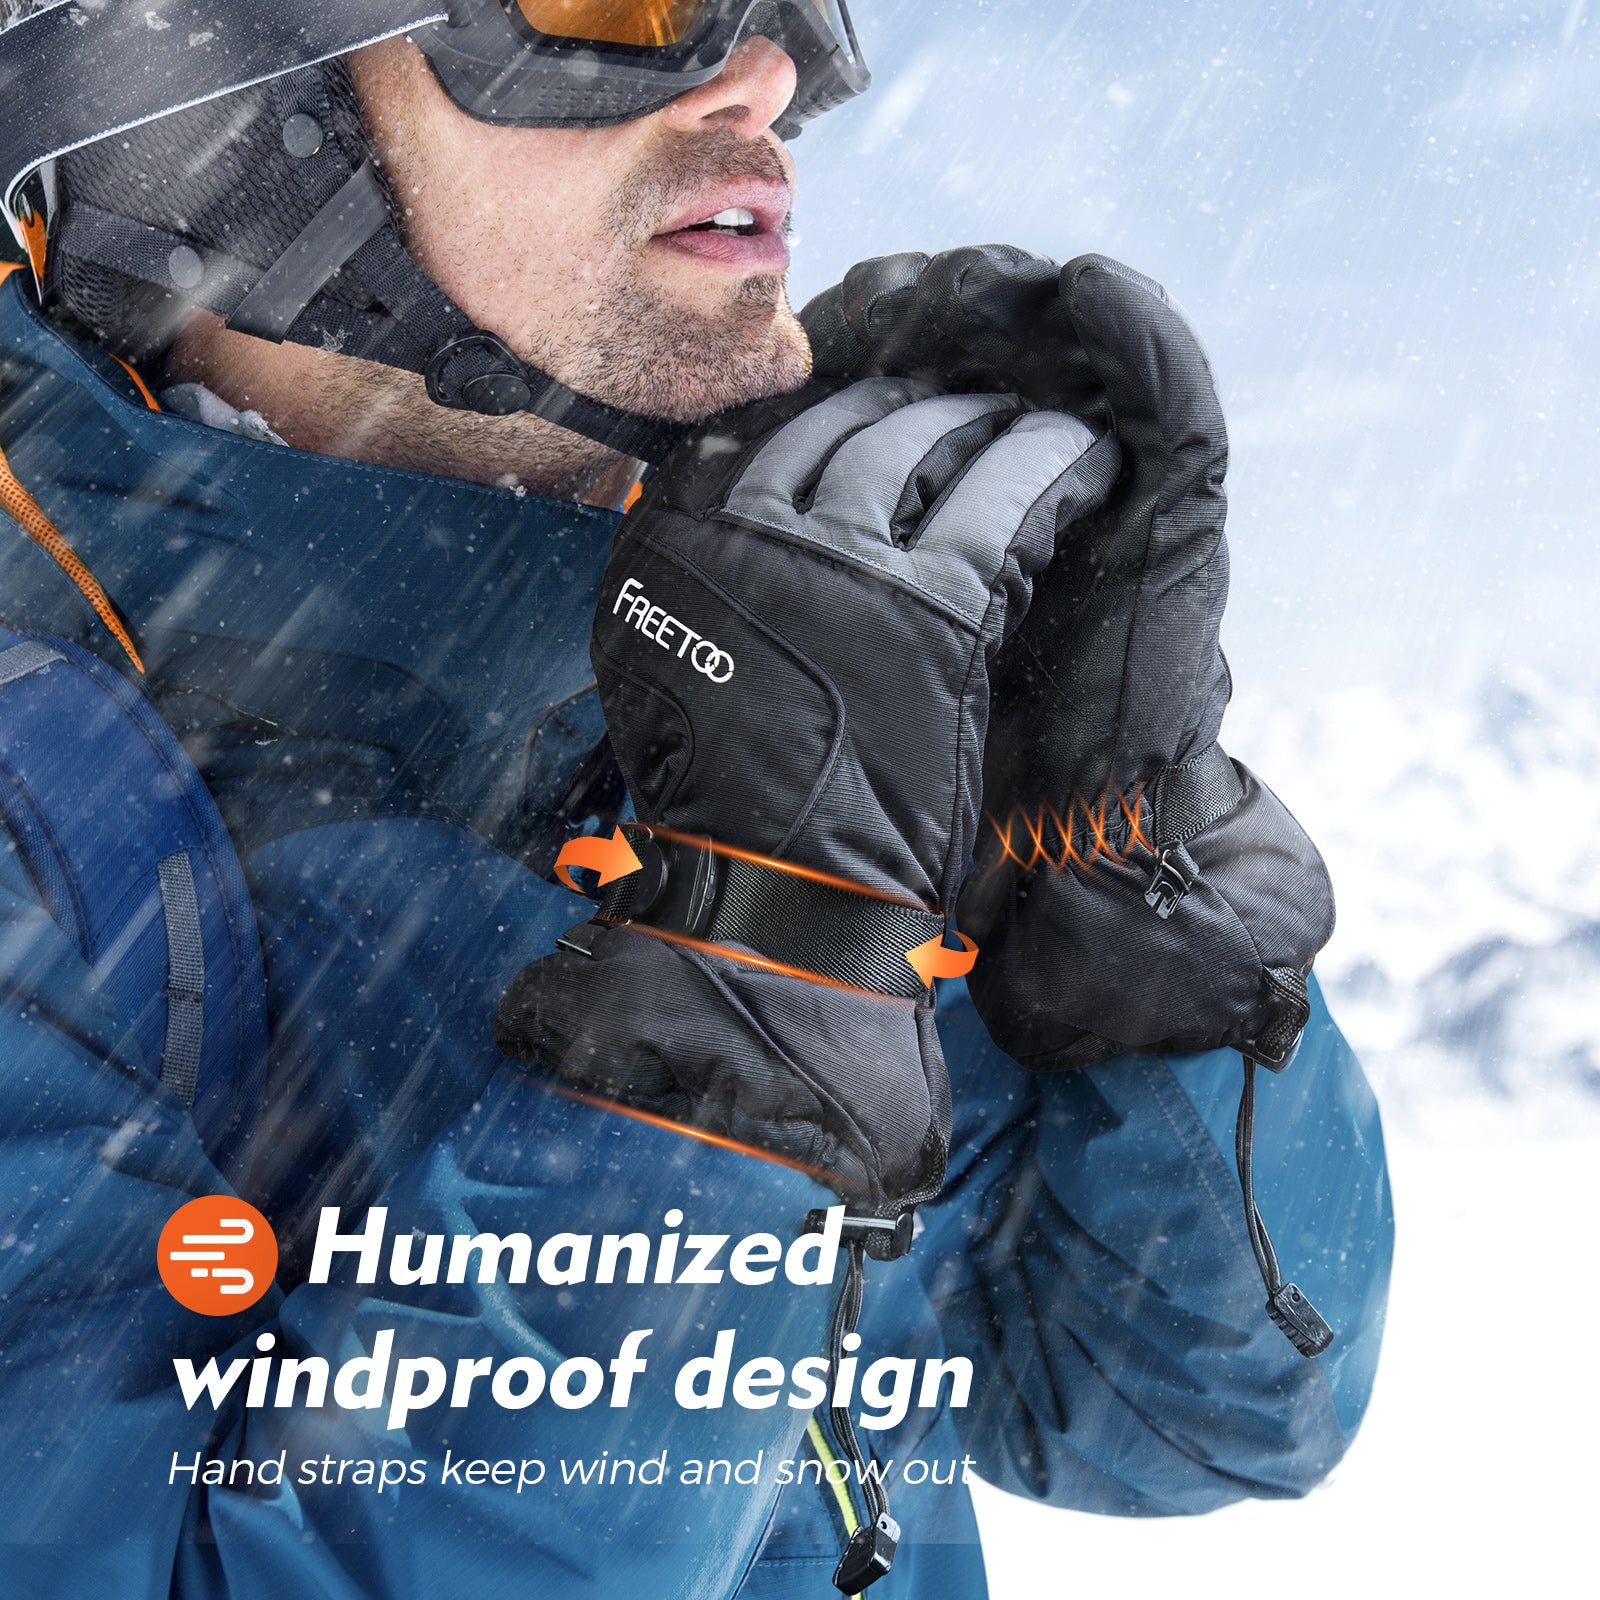 FREETOO® Waterproof and Windproof Winter Skiing Gloves